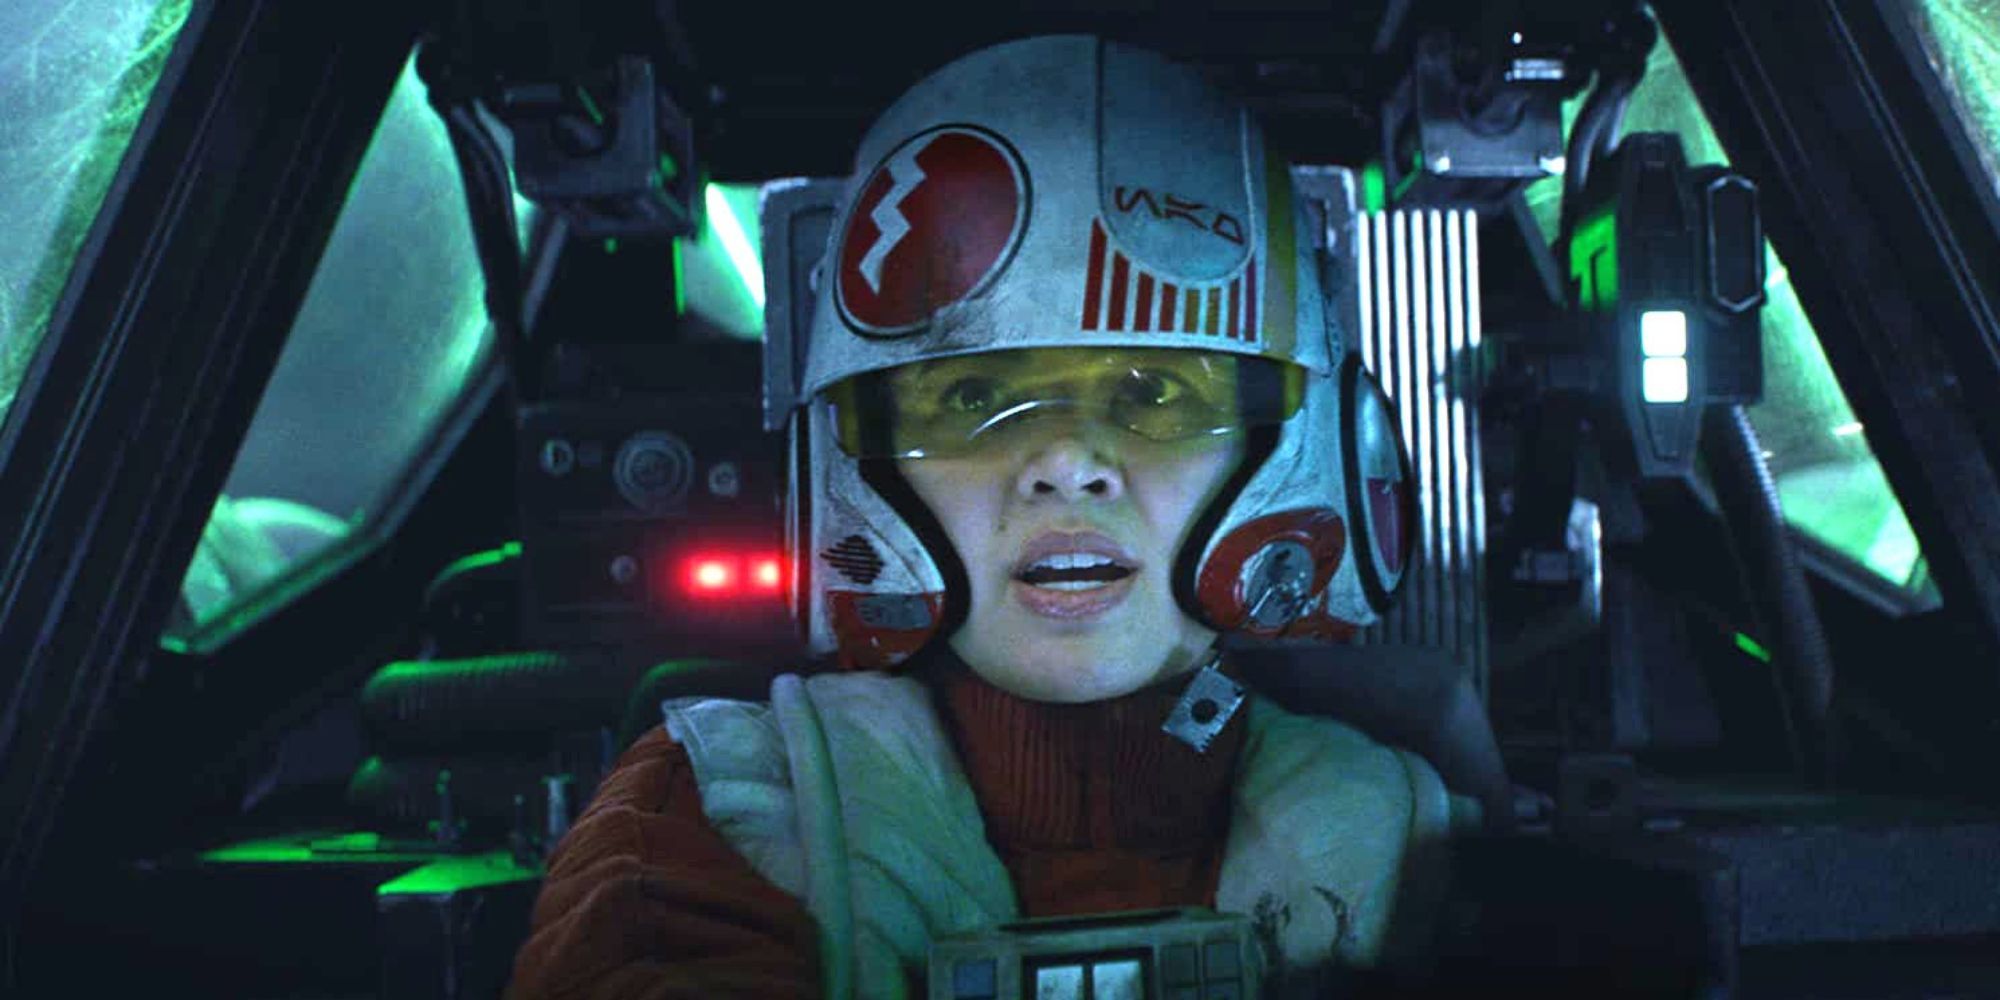 Jessica Henwick in Star Wars: The Force Awakens